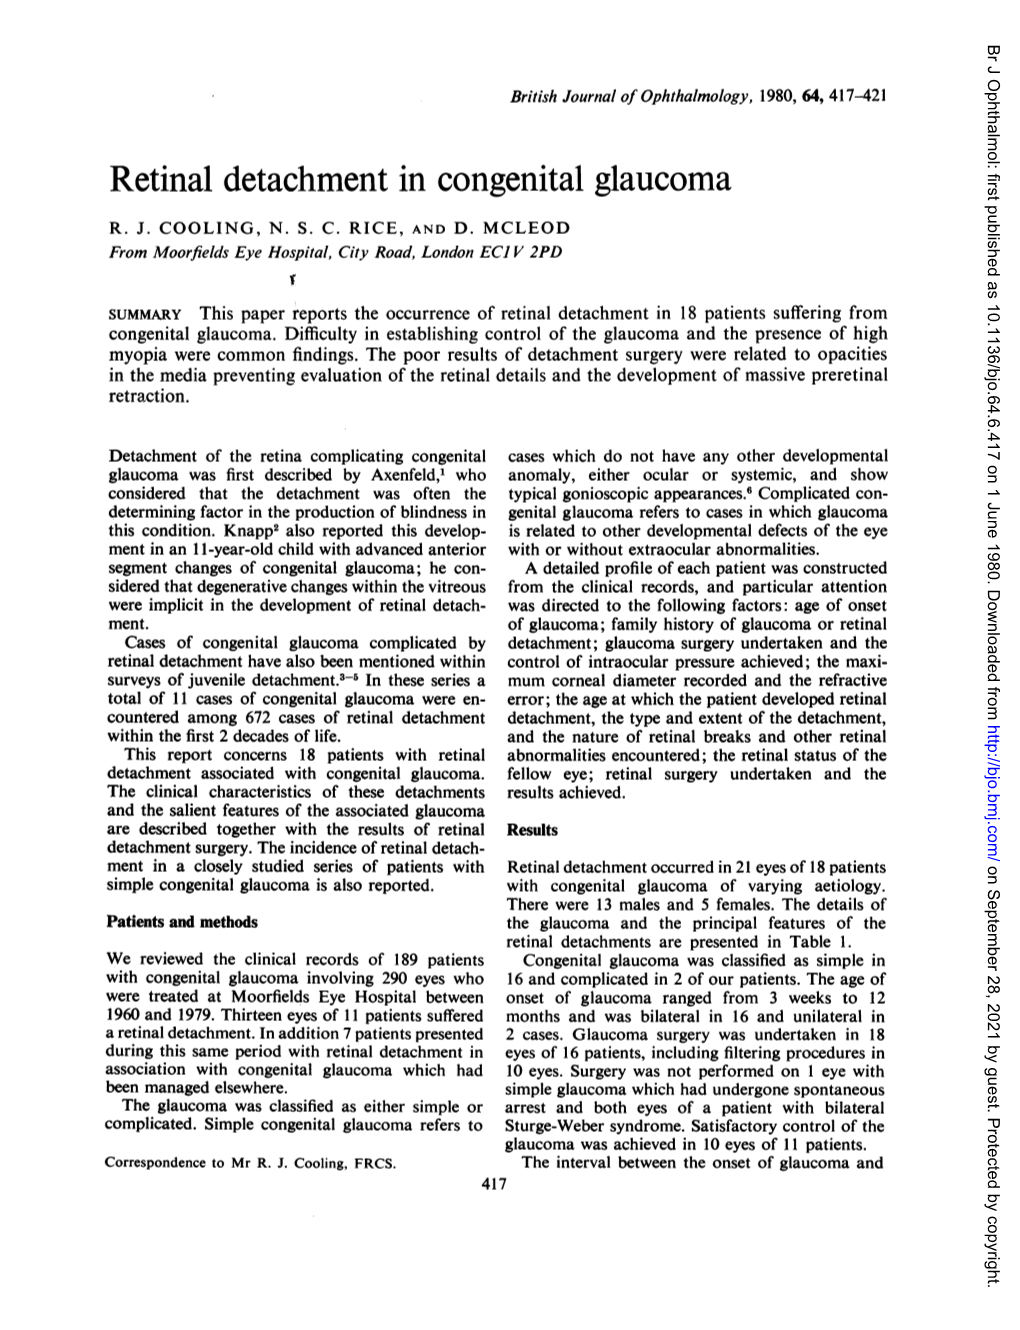 Retinal Detachment in Congenital Glaucoma